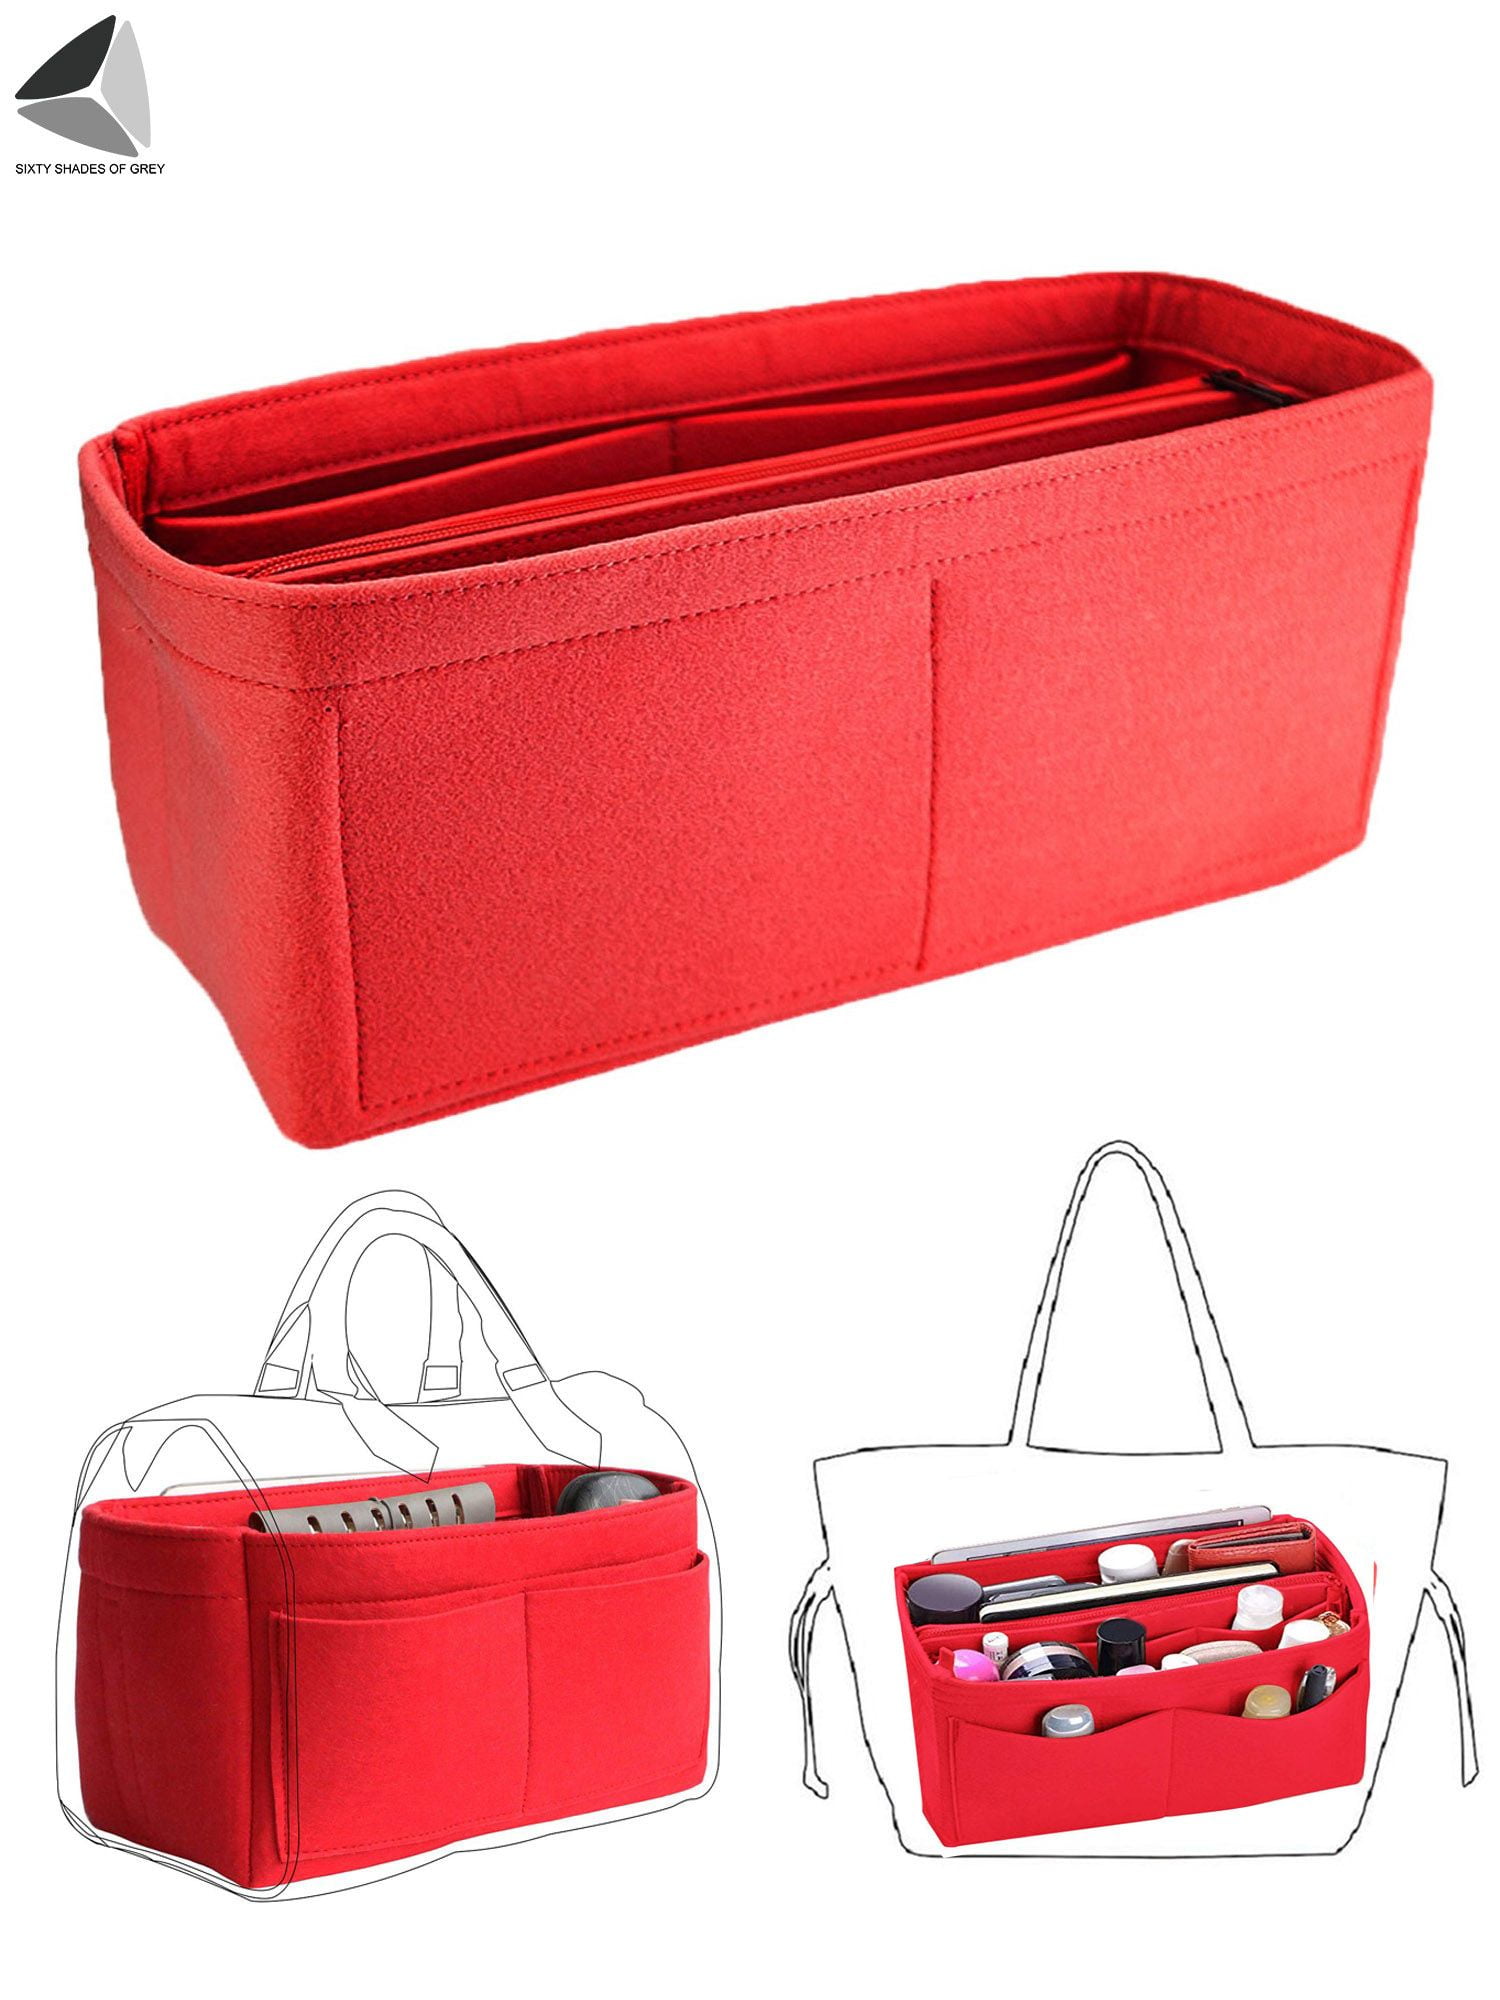 14 CM BAG Base Shaper Bag Base Crochet Bag Bottom Insert Tote Bag Acrylic  £5.78 - PicClick UK